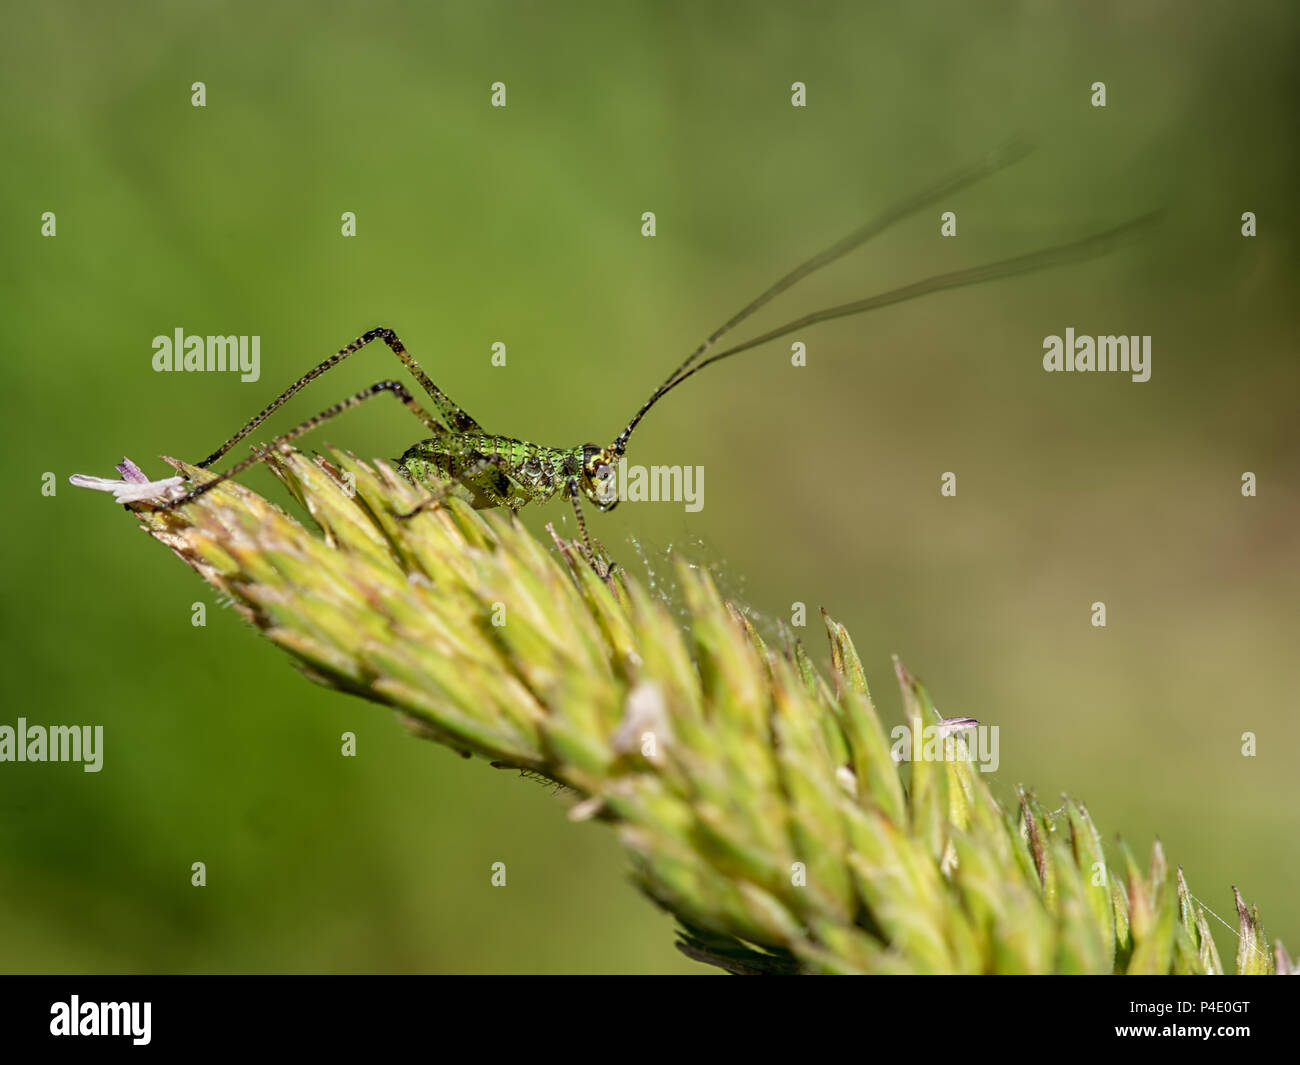 Closeup shot of young cricket on grass stem Stock Photo